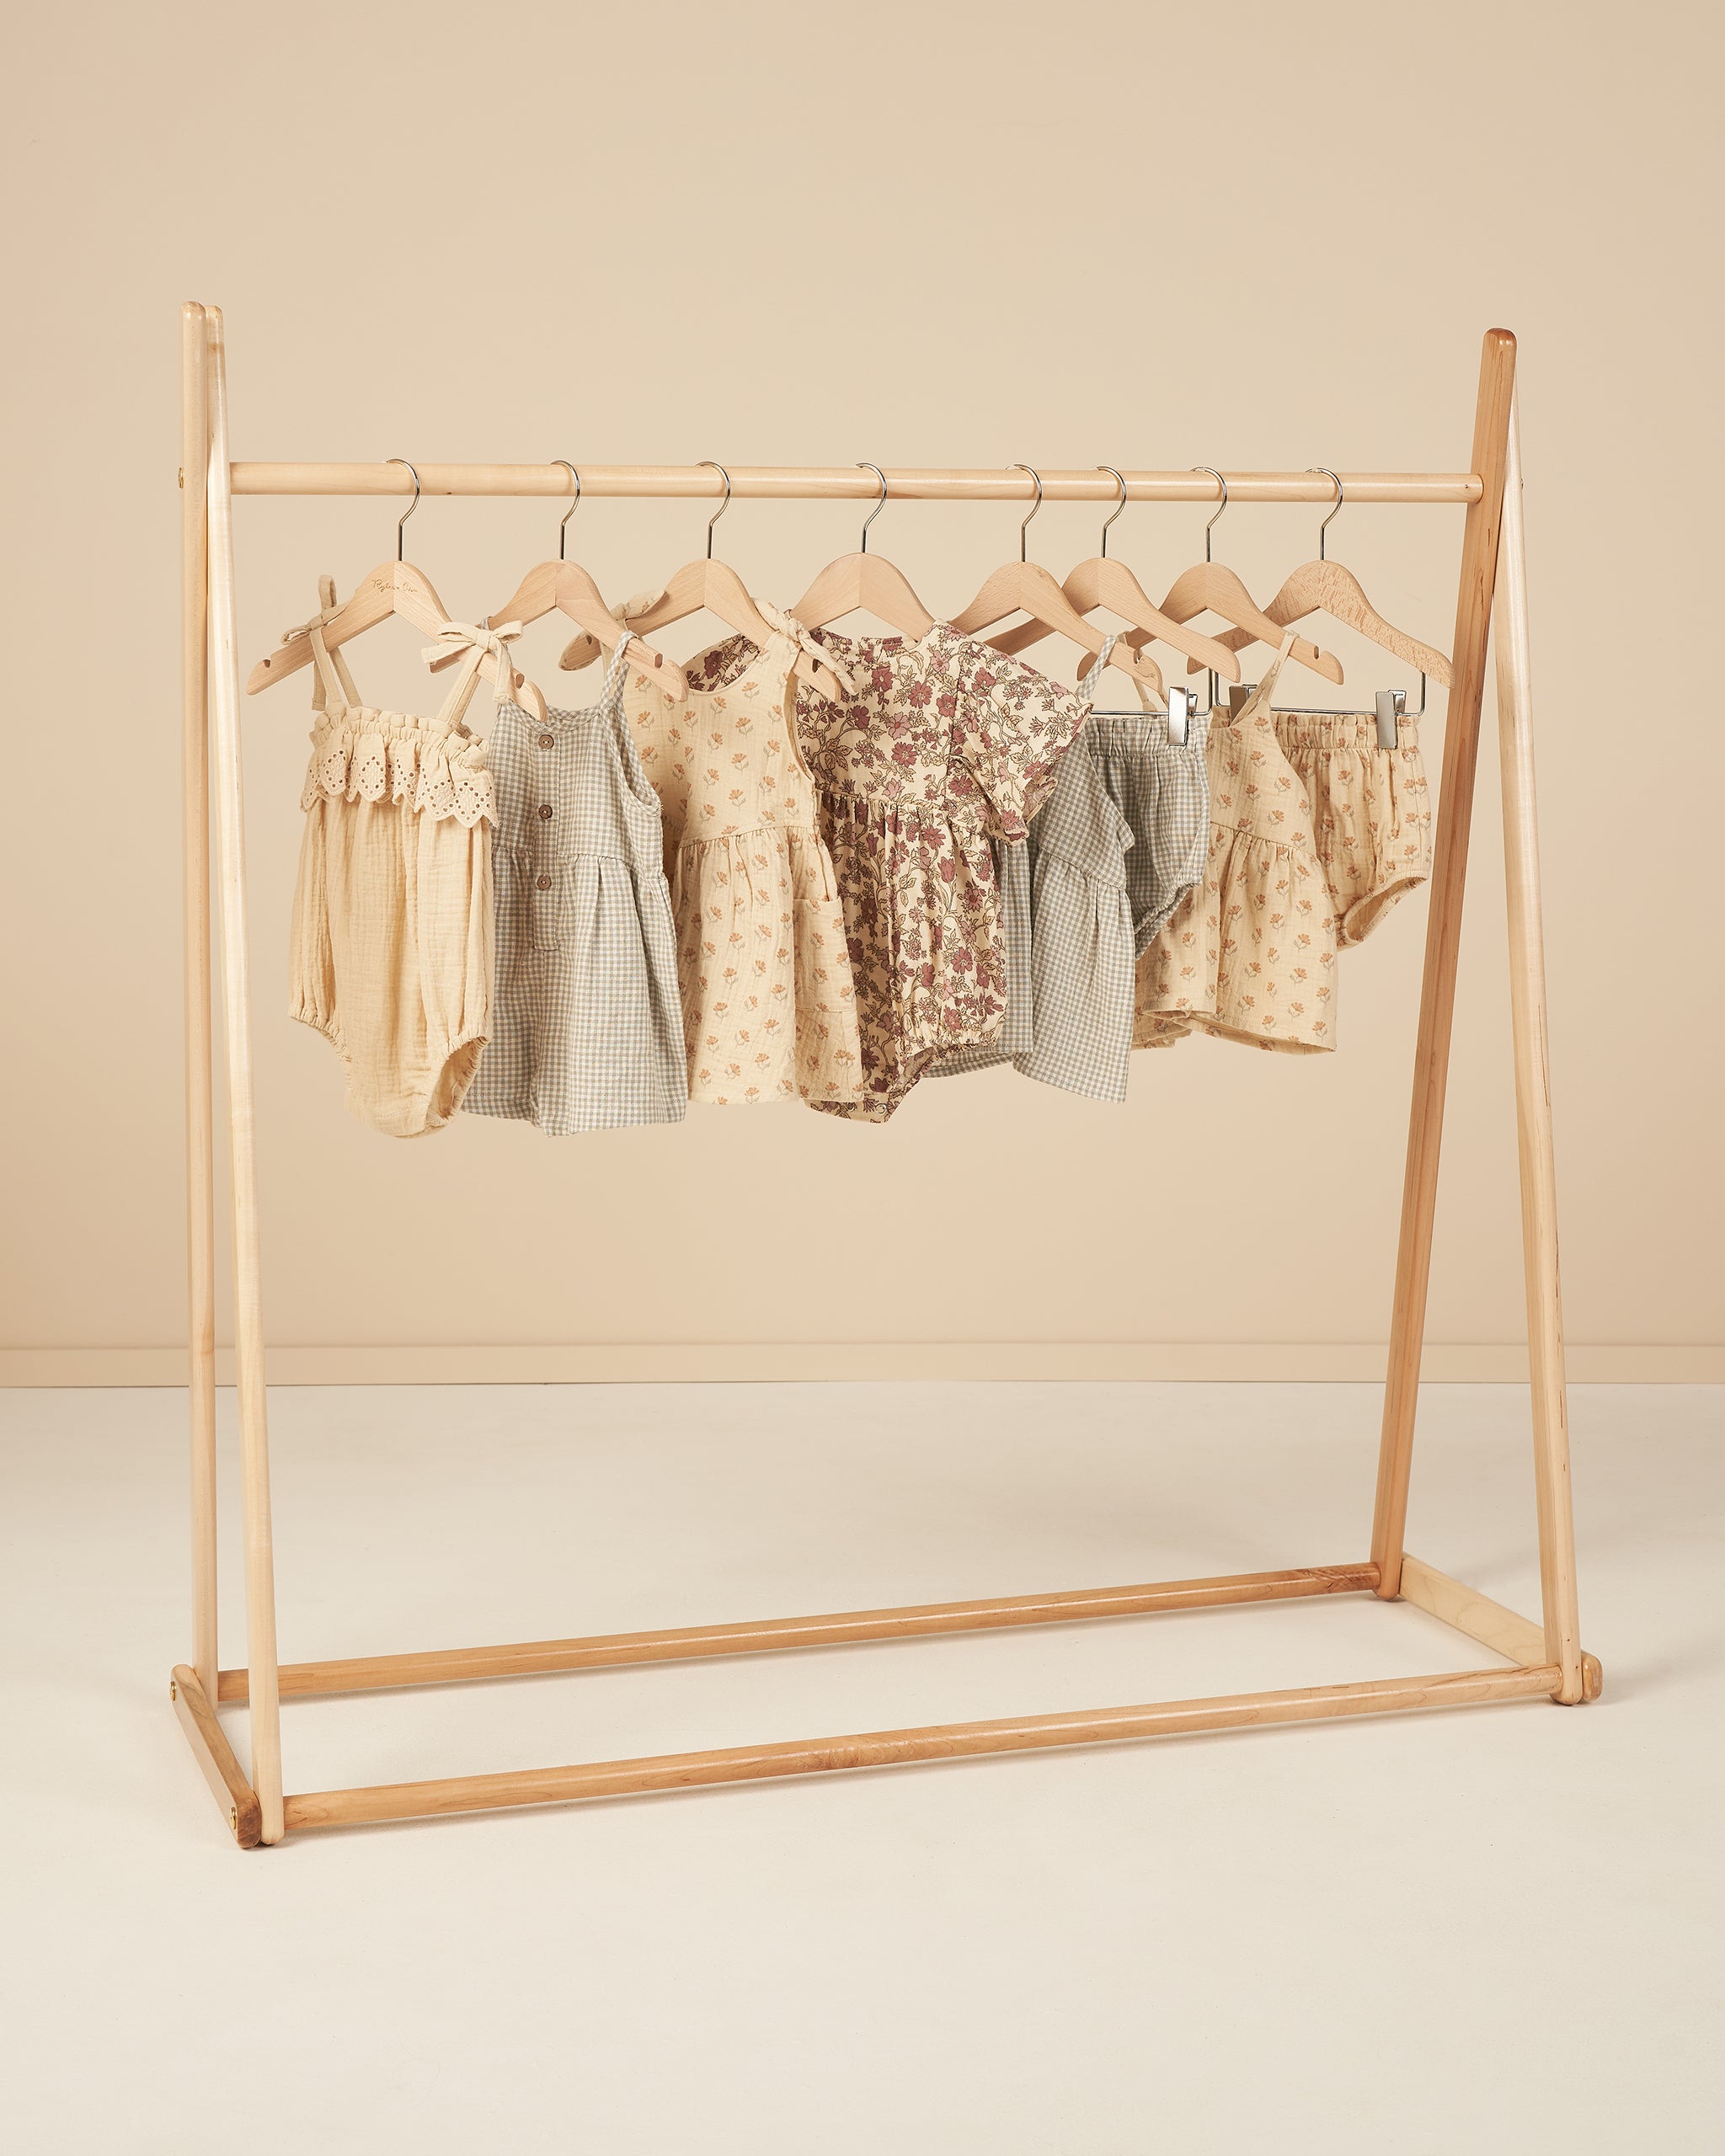 Summer Dress || Vintage Fleur - Rylee + Cru | Kids Clothes | Trendy Baby Clothes | Modern Infant Outfits |